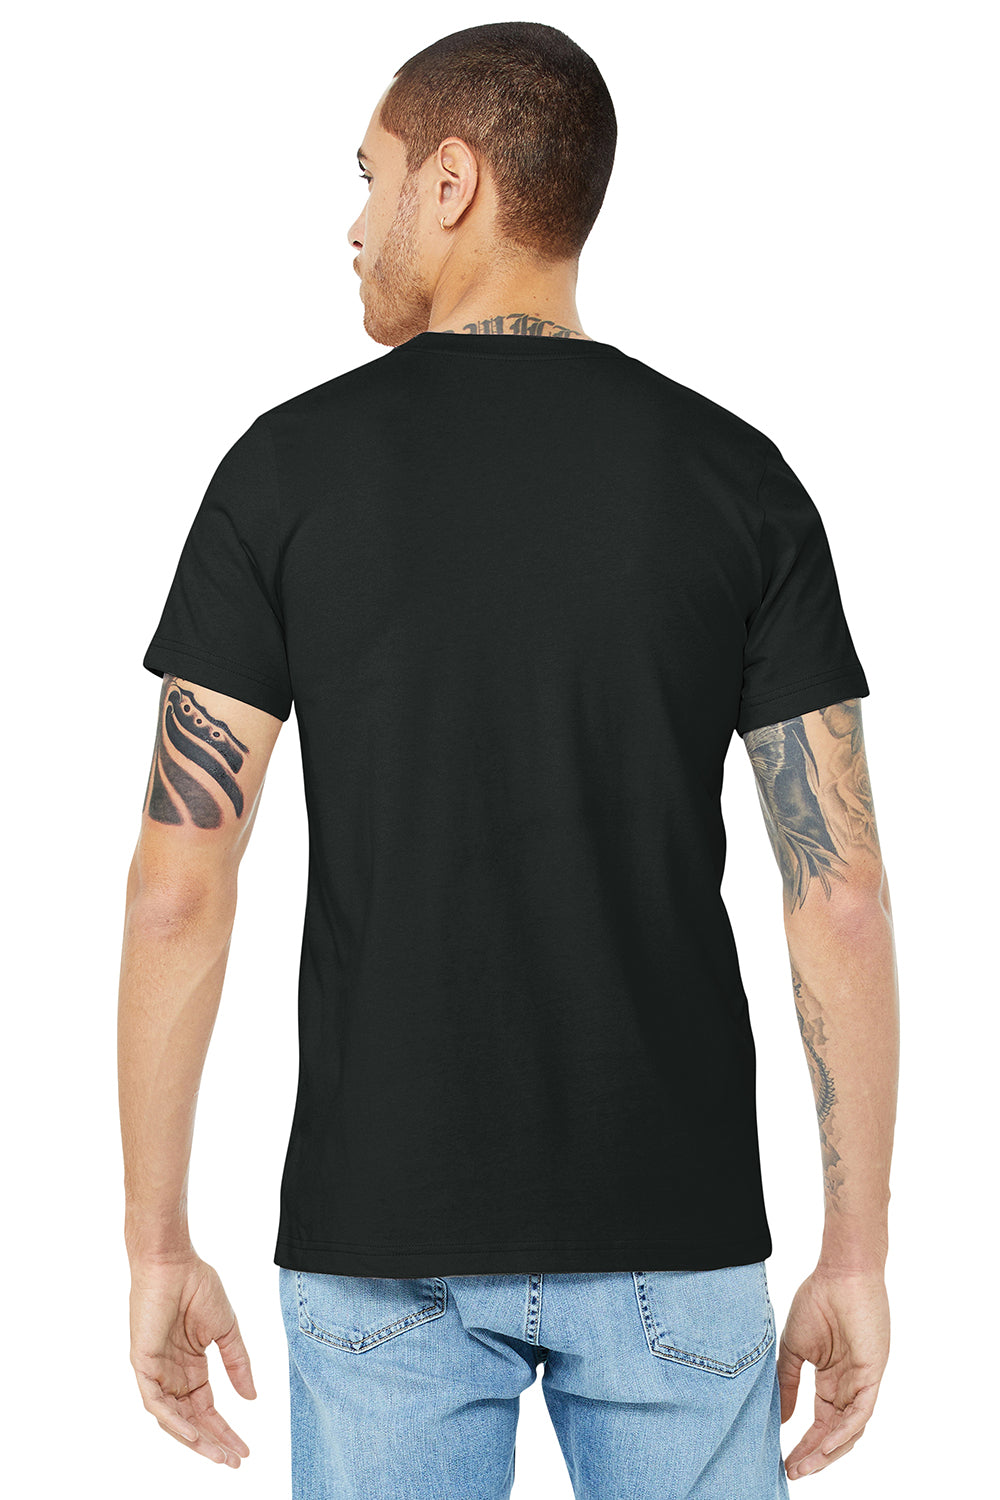 Bella + Canvas BC3001/3001C Mens Jersey Short Sleeve Crewneck T-Shirt Vintage Black Model Back